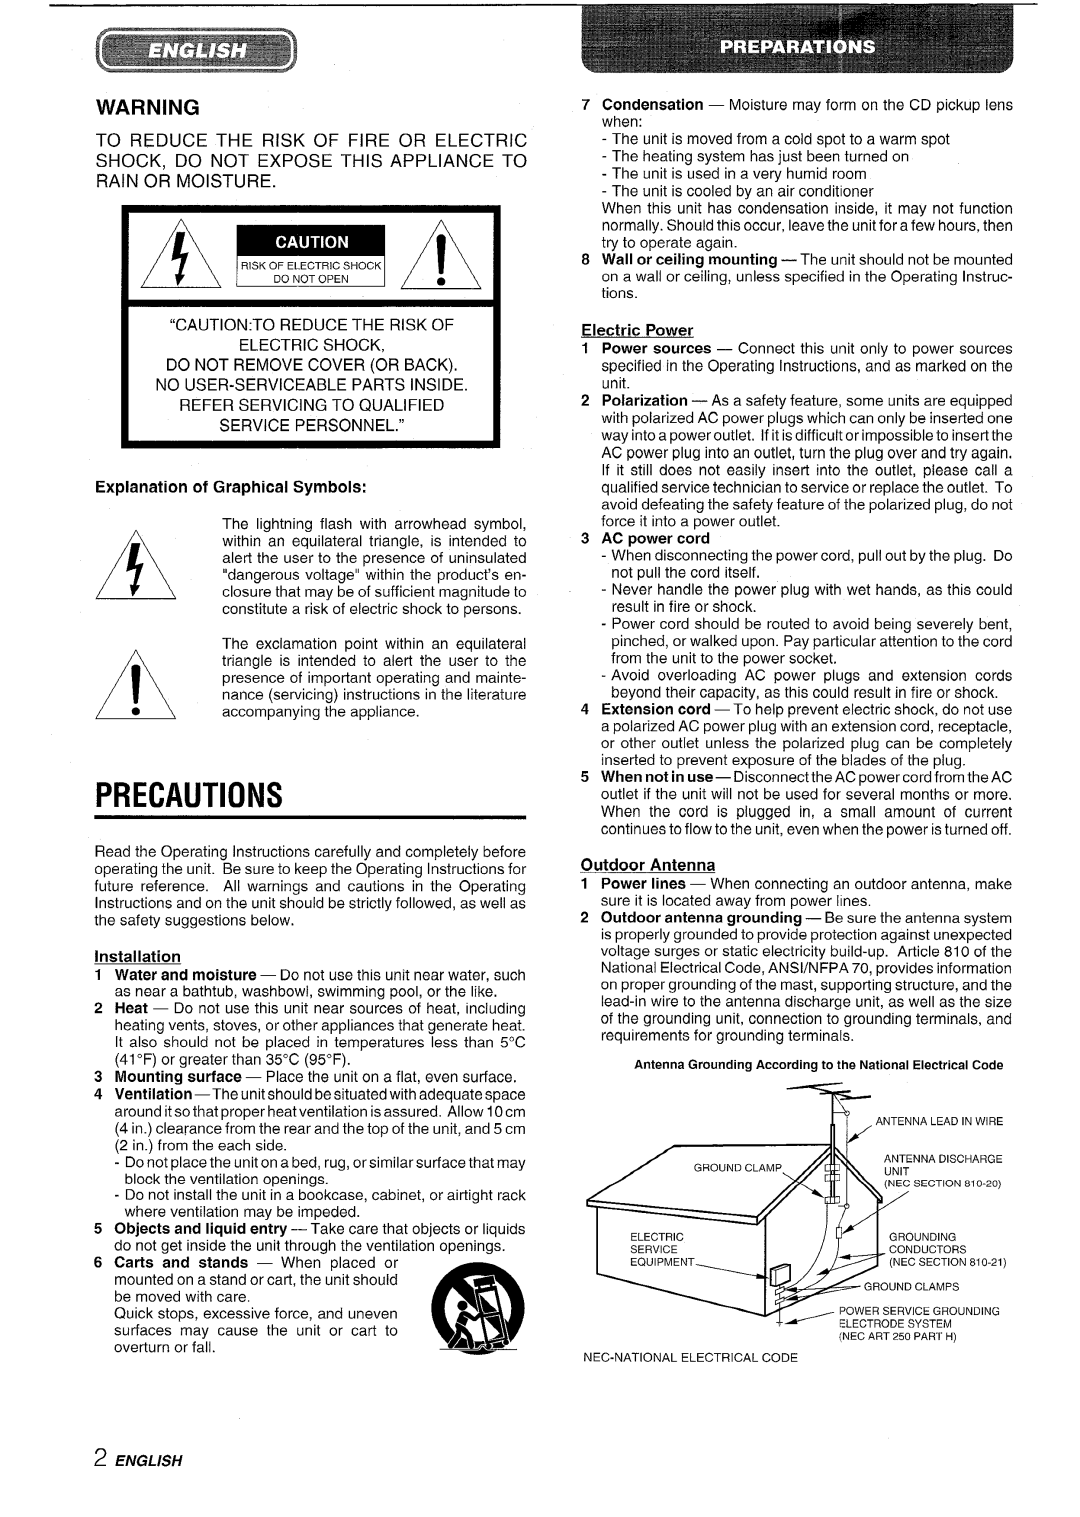 Aiwa XR-M70 manual A ~, Precautions, Rain Or Moisture, Outdoor Antenna, English 